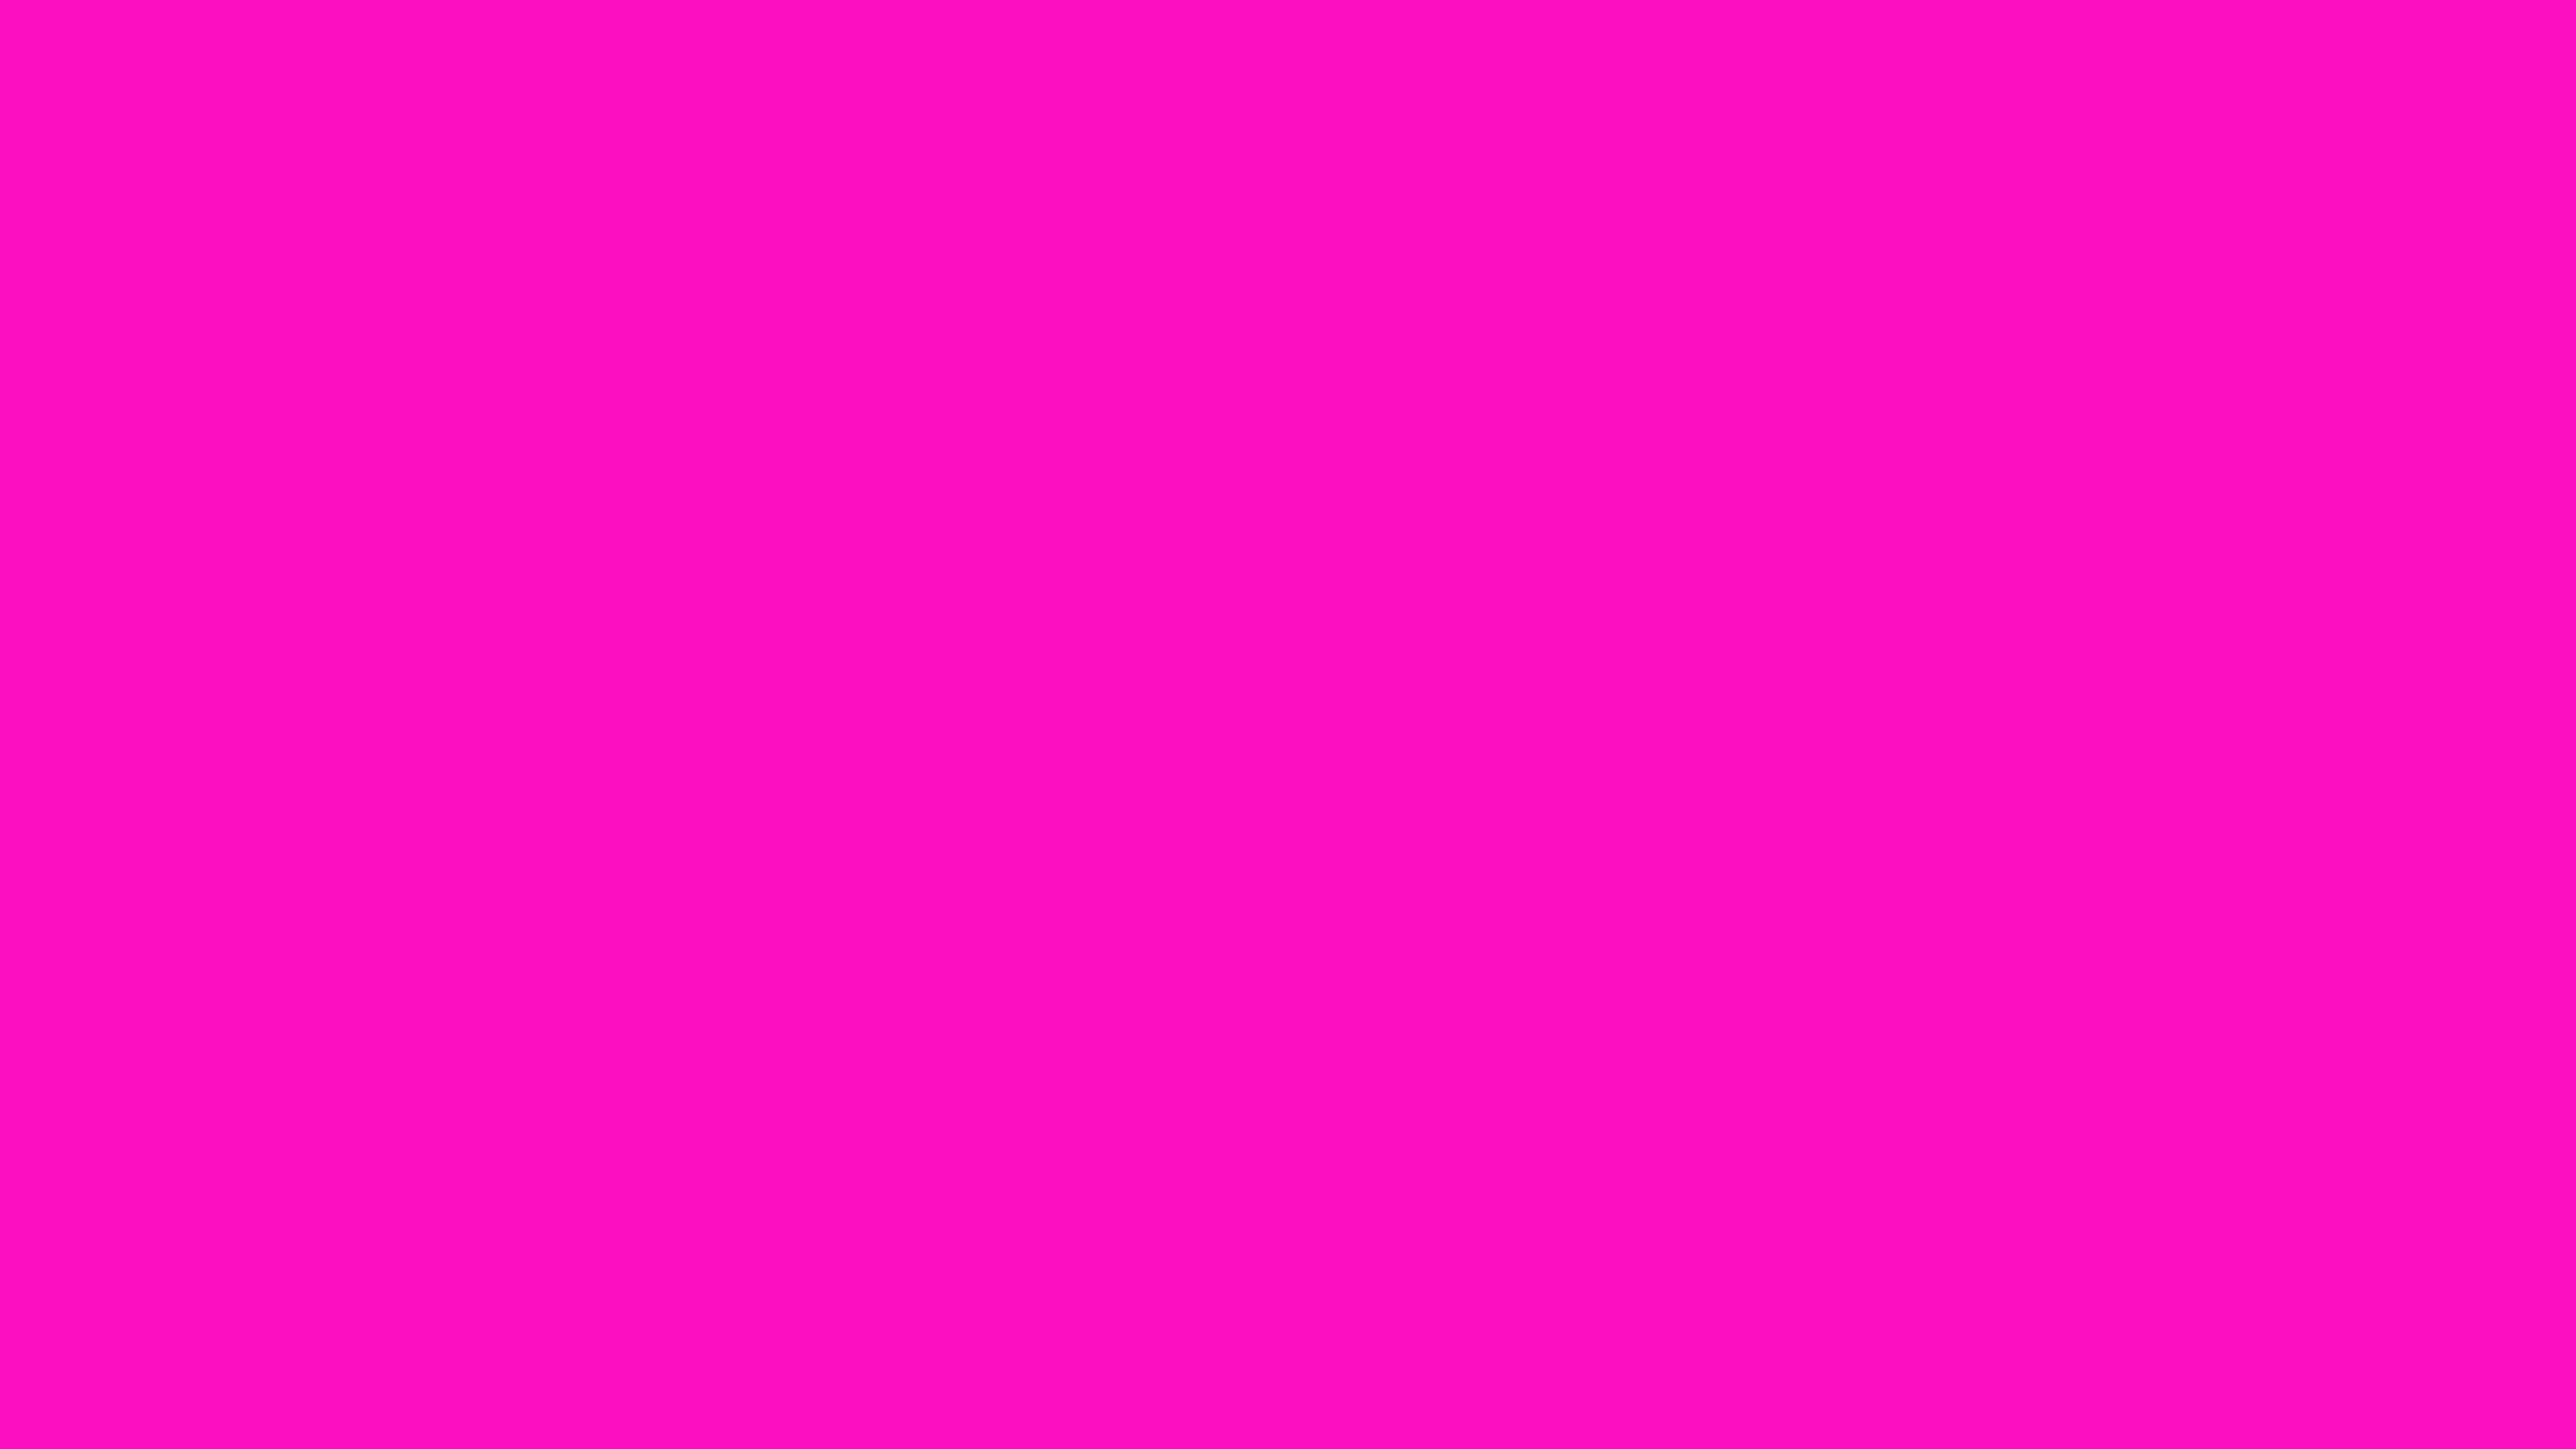 7680x4320 Shocking Pink Solid Color Background